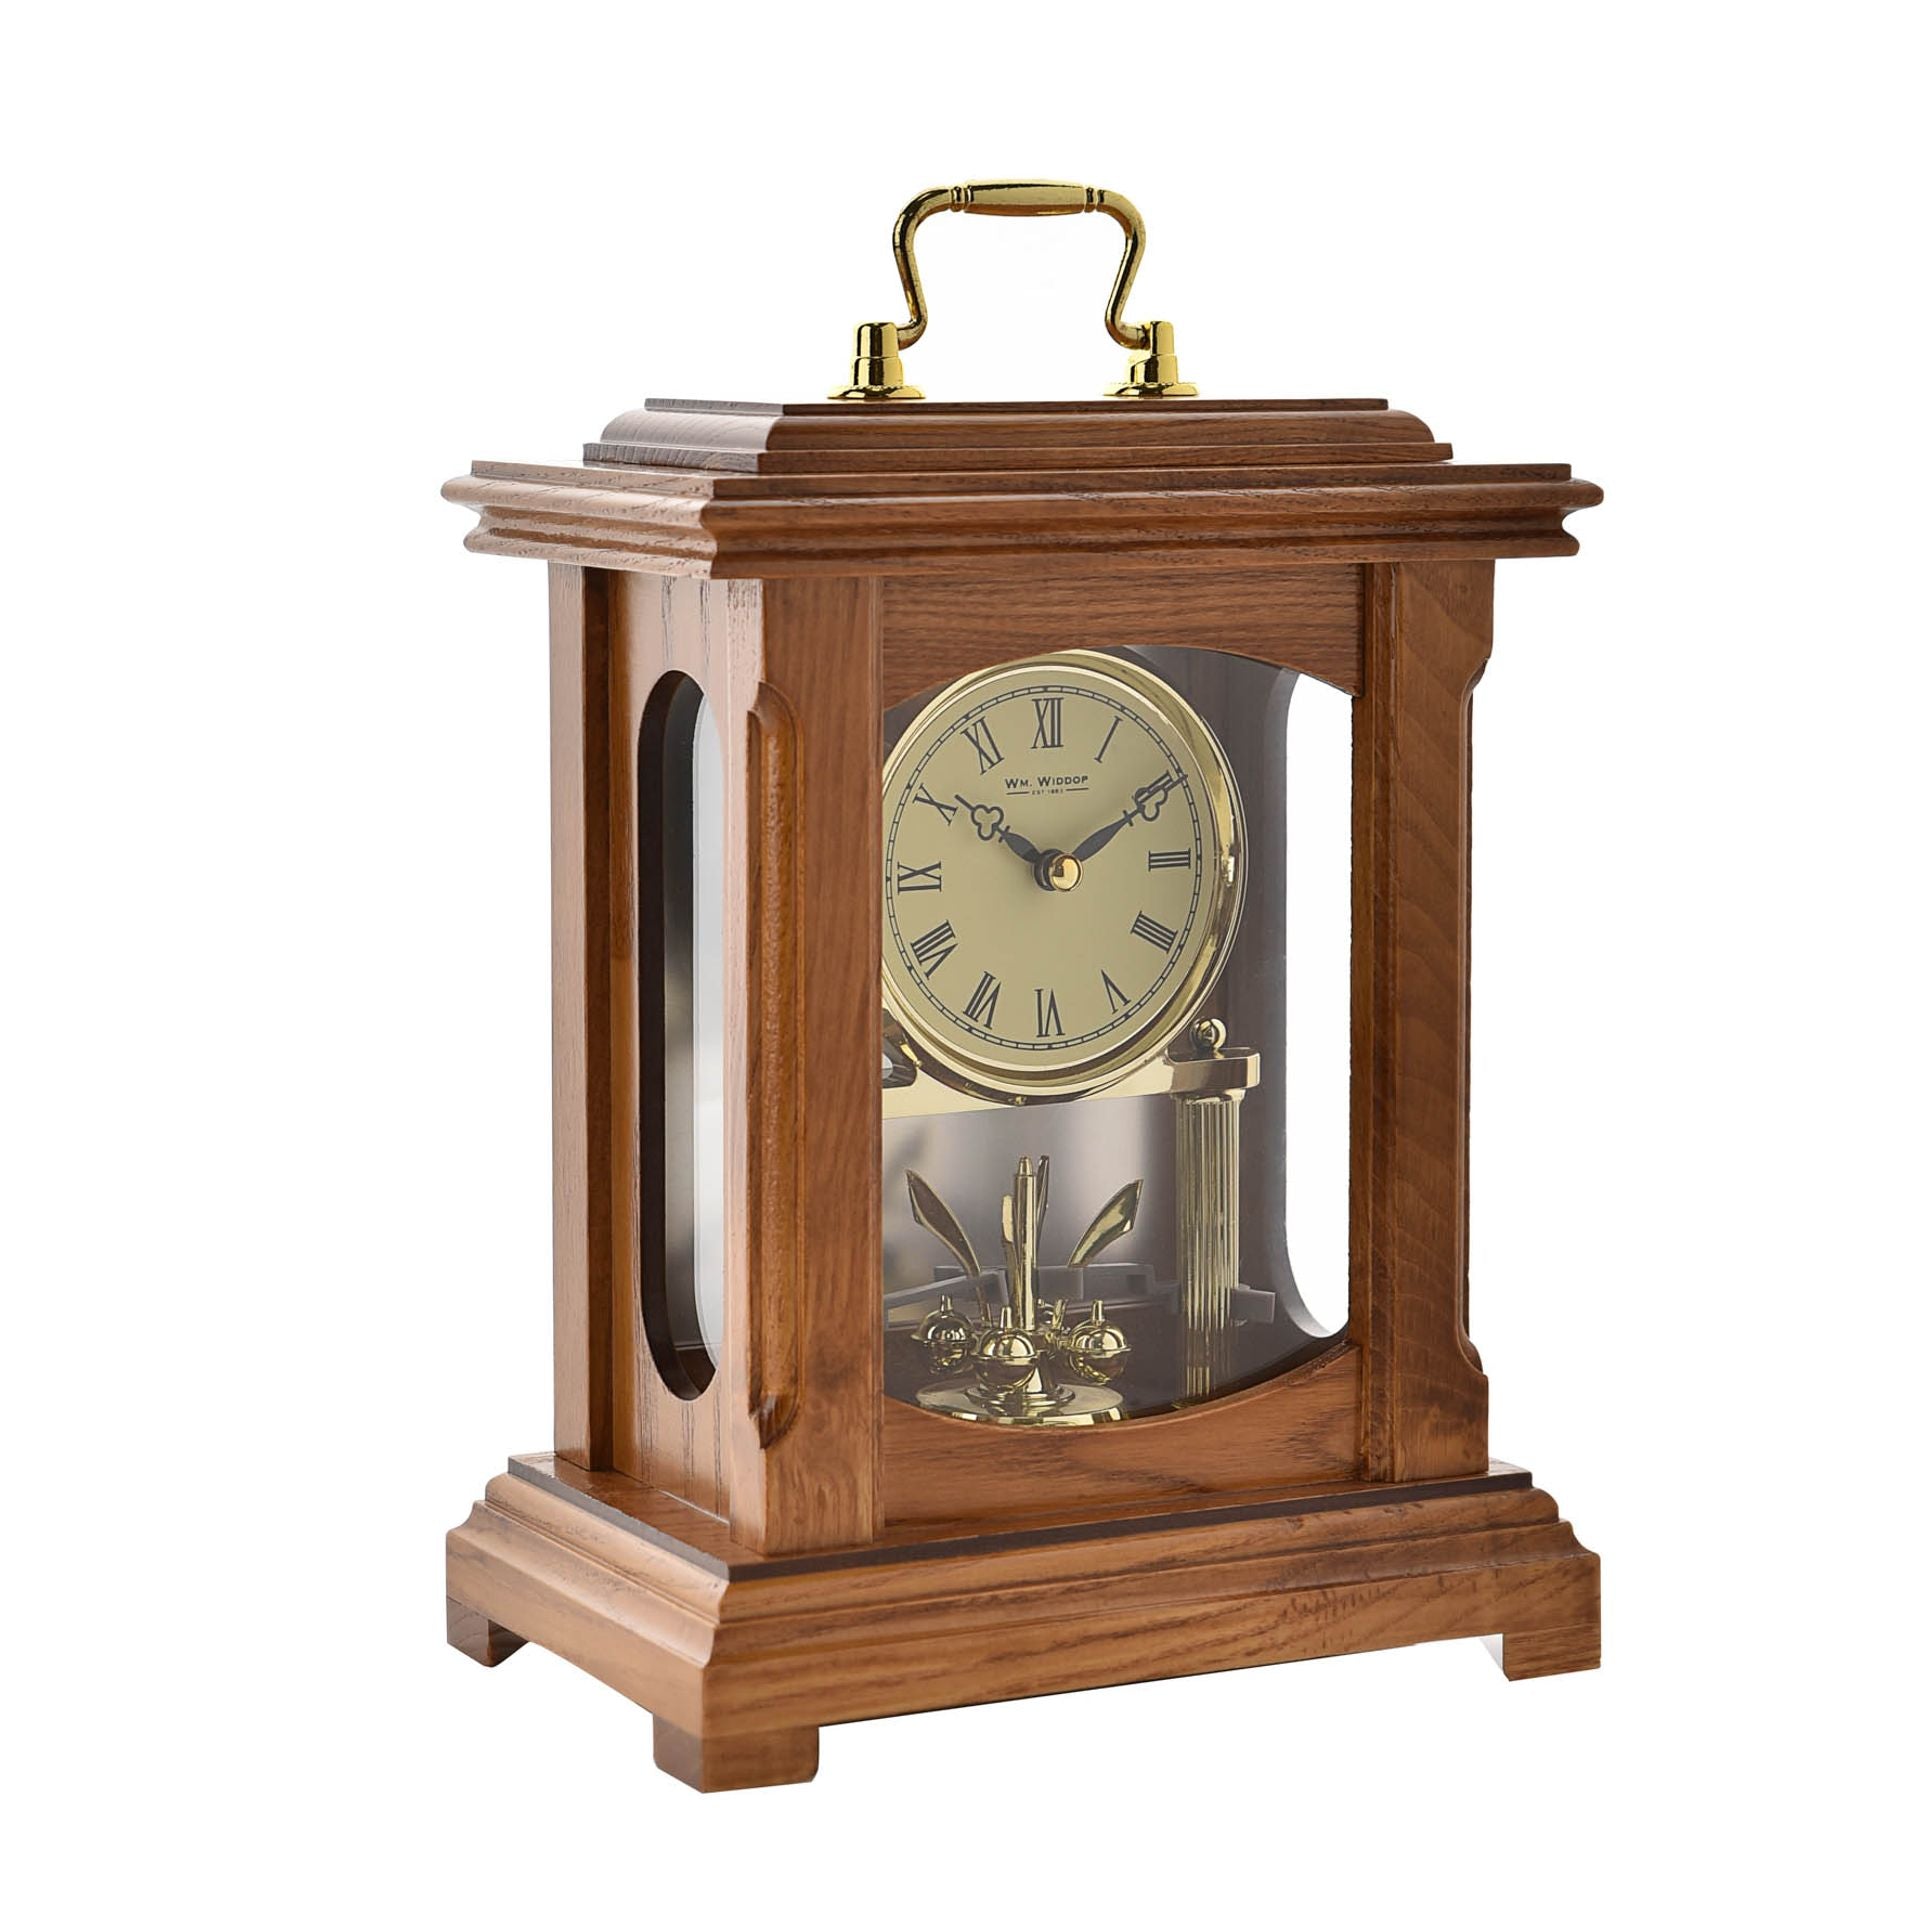 WM. Widdop Solid Wood Mantel Clock With Handle - Rotating Pendulum